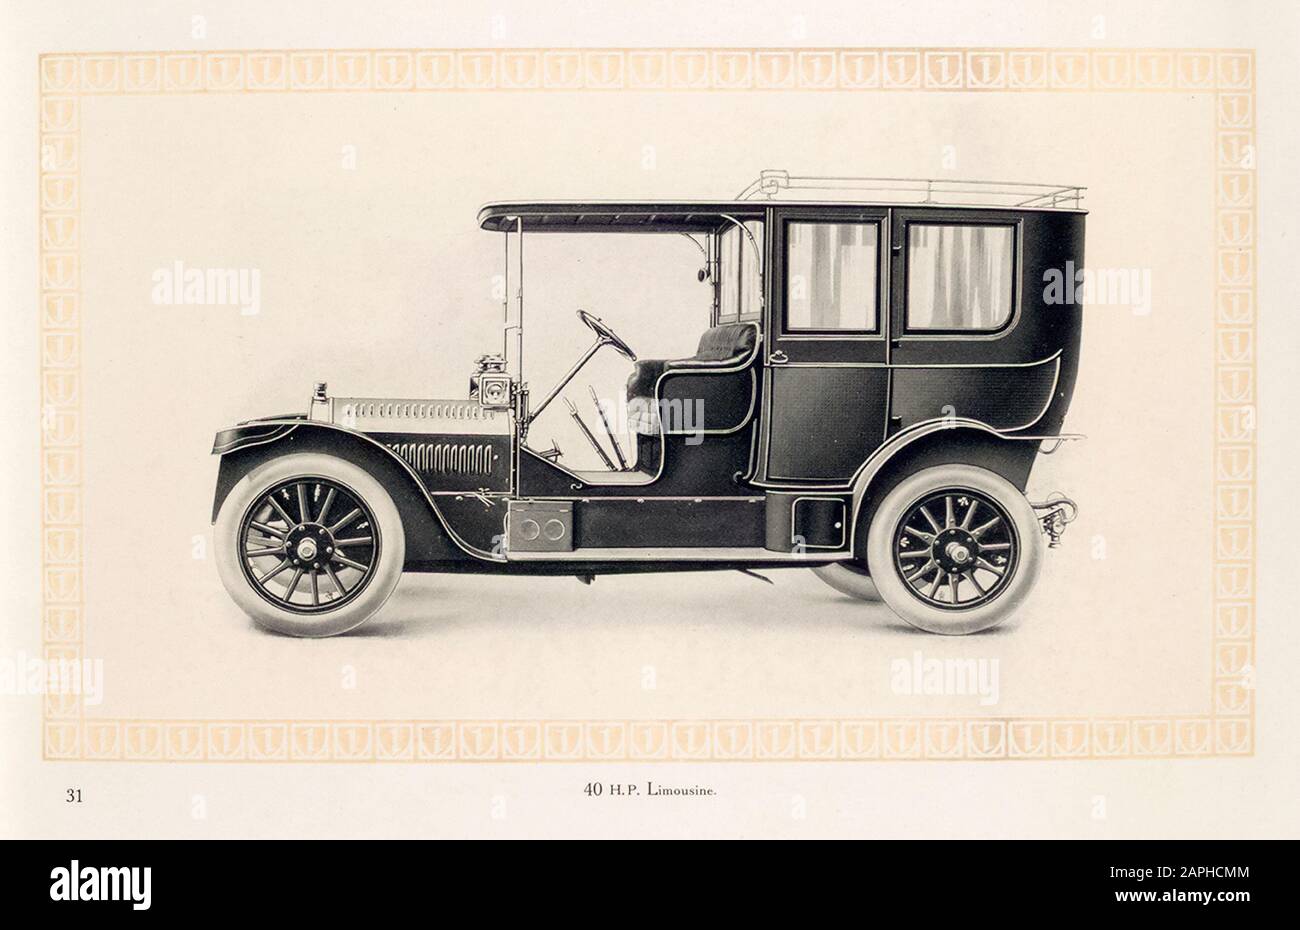 Coche de época, coche de motor Benz, automóvil, limusina de 40 cv, del catálogo de Benz & Co, ilustración 1909 Foto de stock